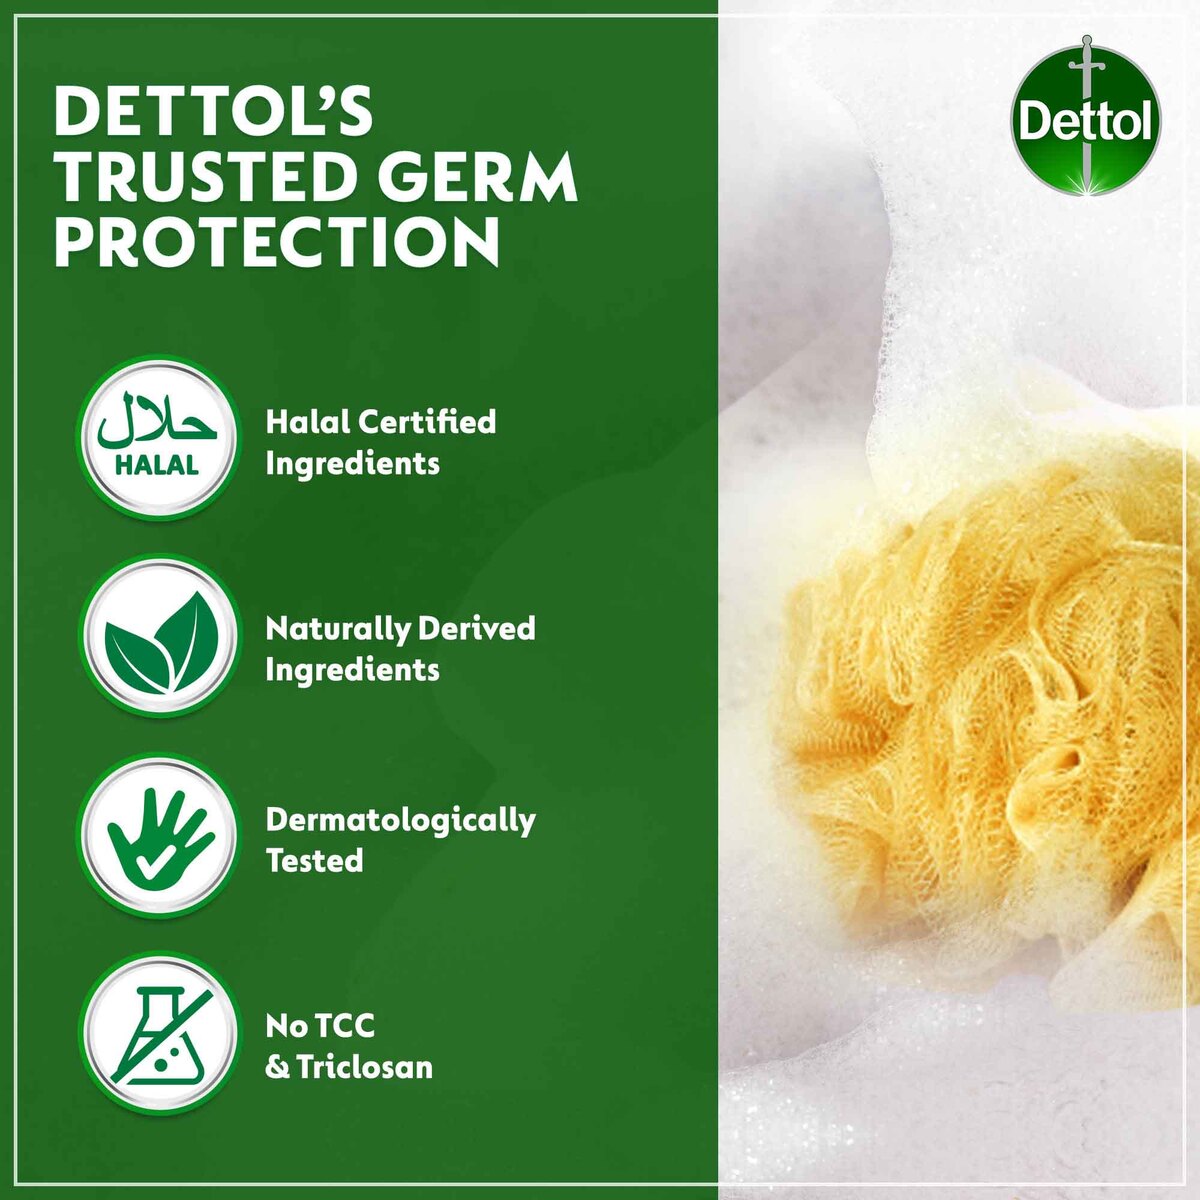 Dettol Anti-Bacterial Bar Soap Skincare 130 g